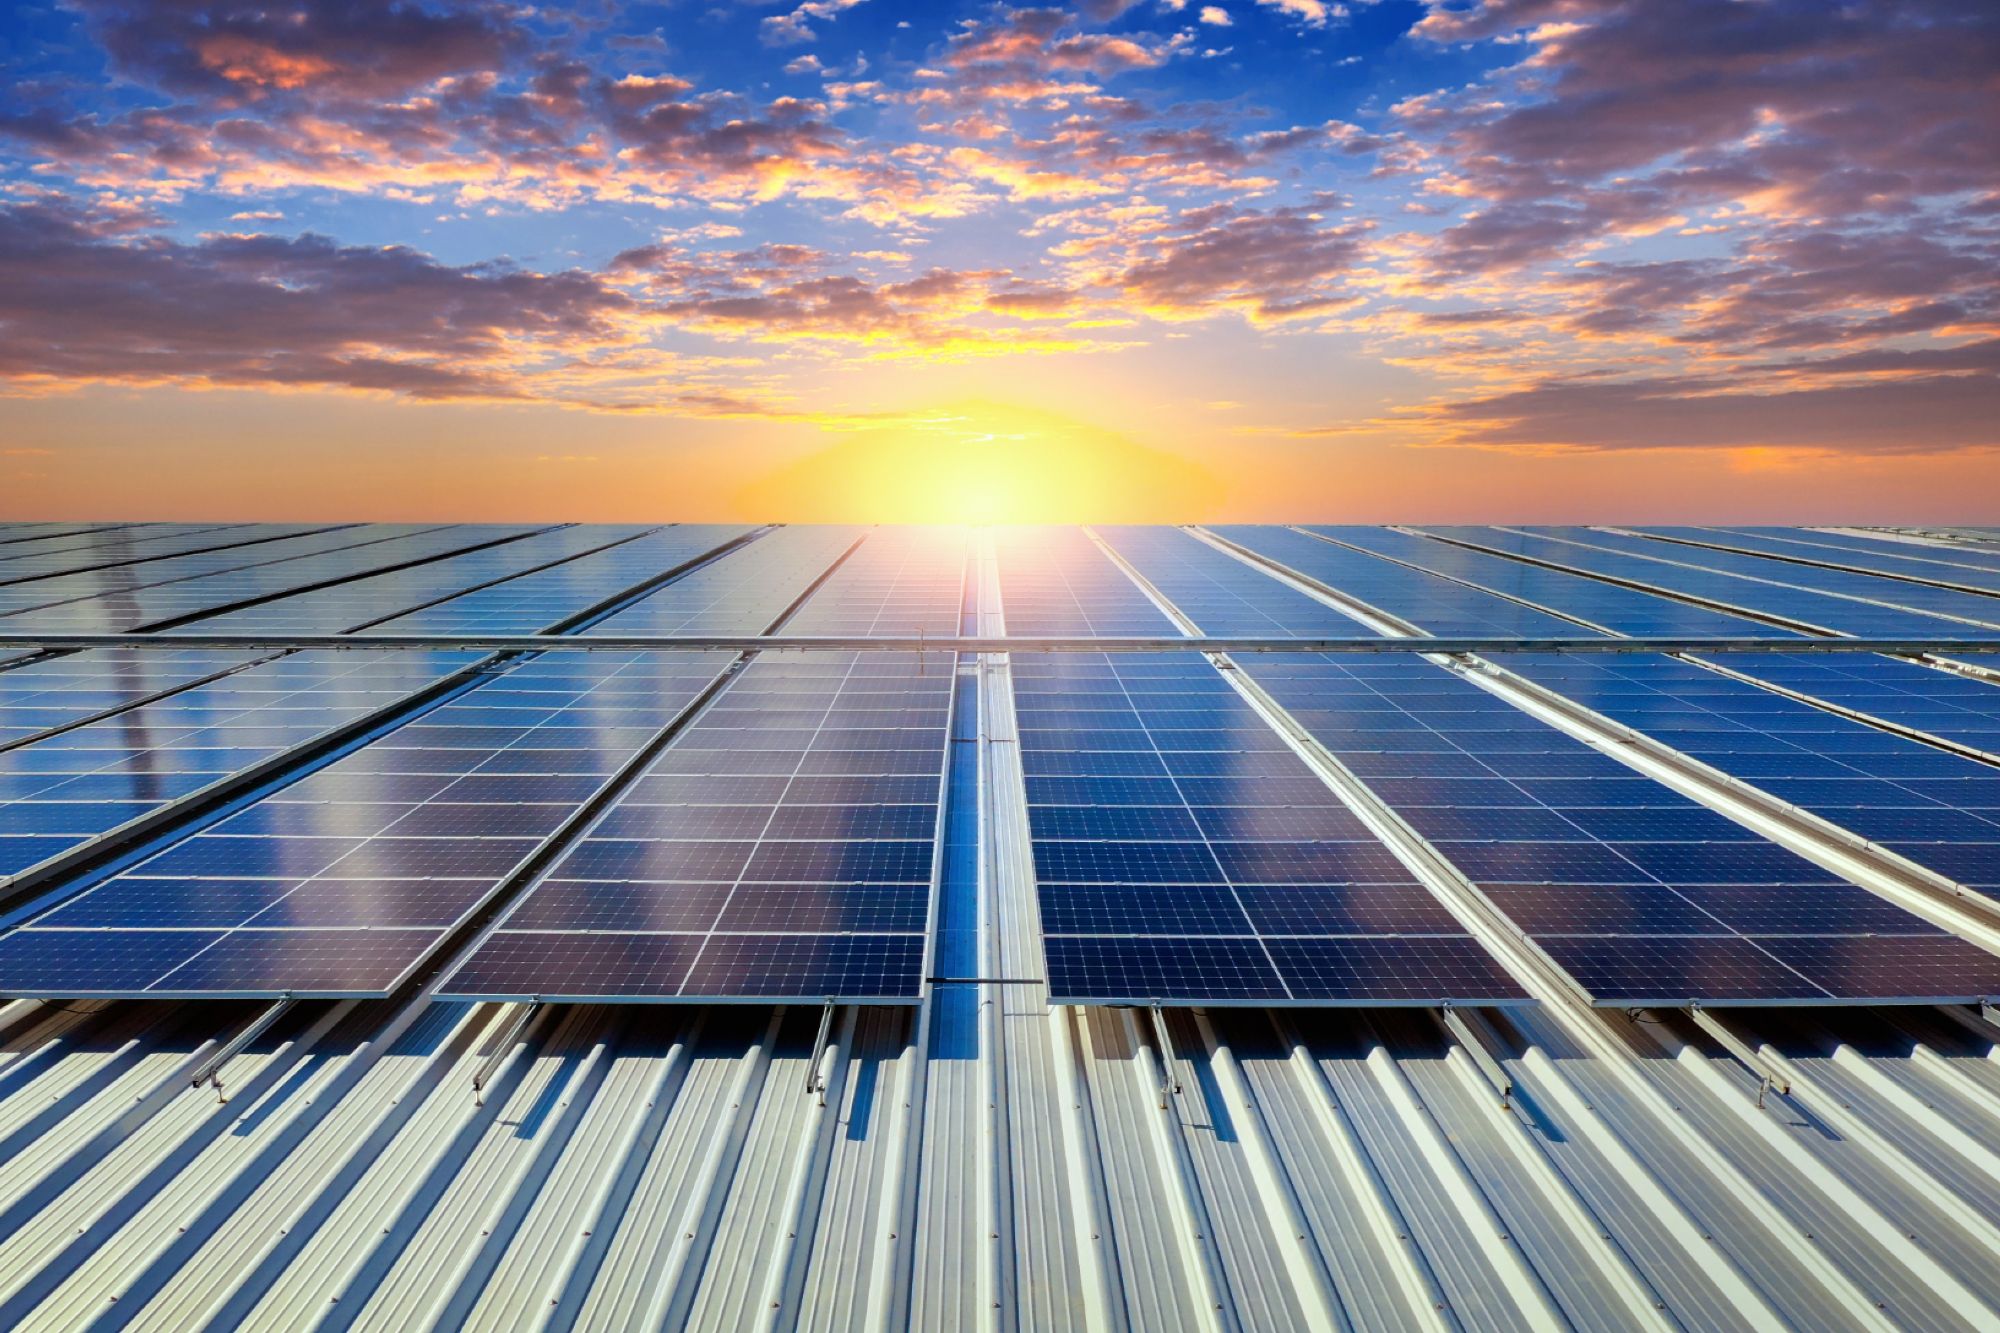 IndiGrid expands solar portfolio, acquires 300 MW RSUPL in Rajasthan for INR 1,650 crores